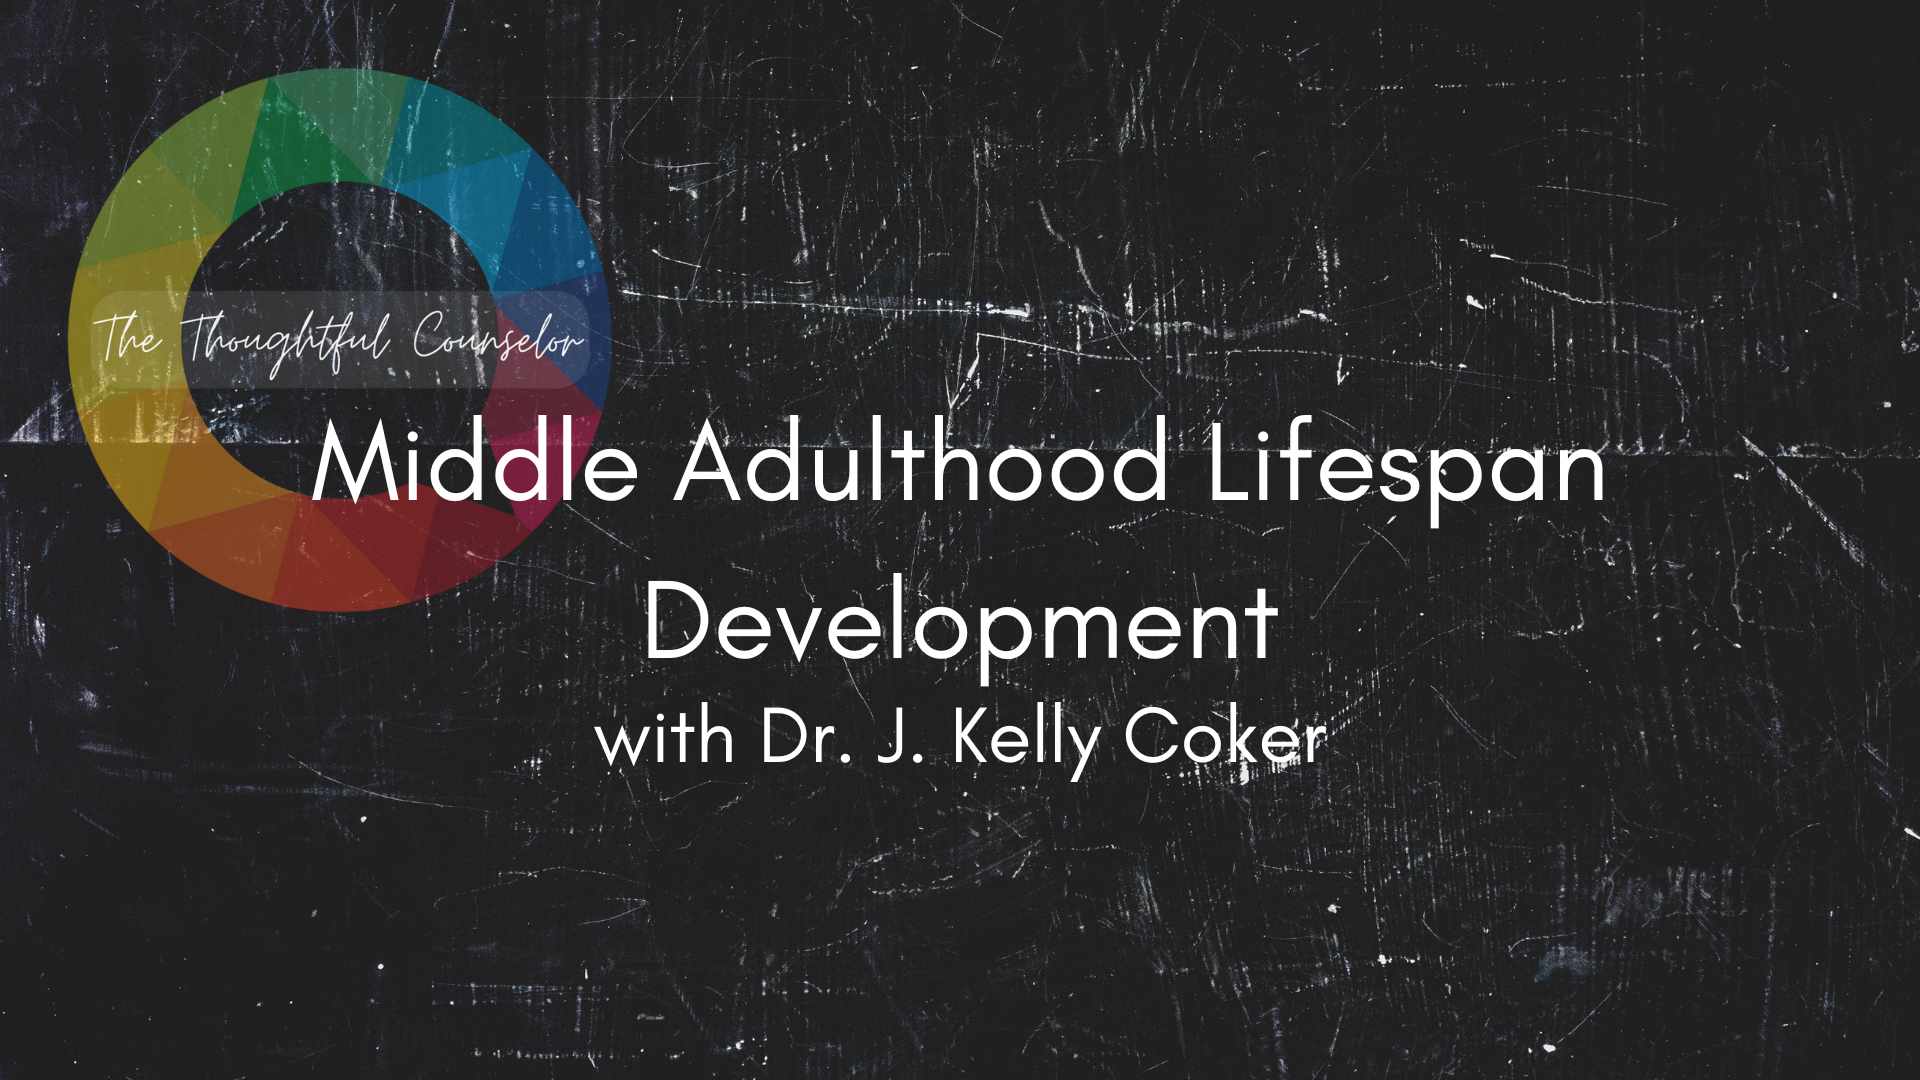 Understanding Middle Adulthood Development Through a Cultural Lens